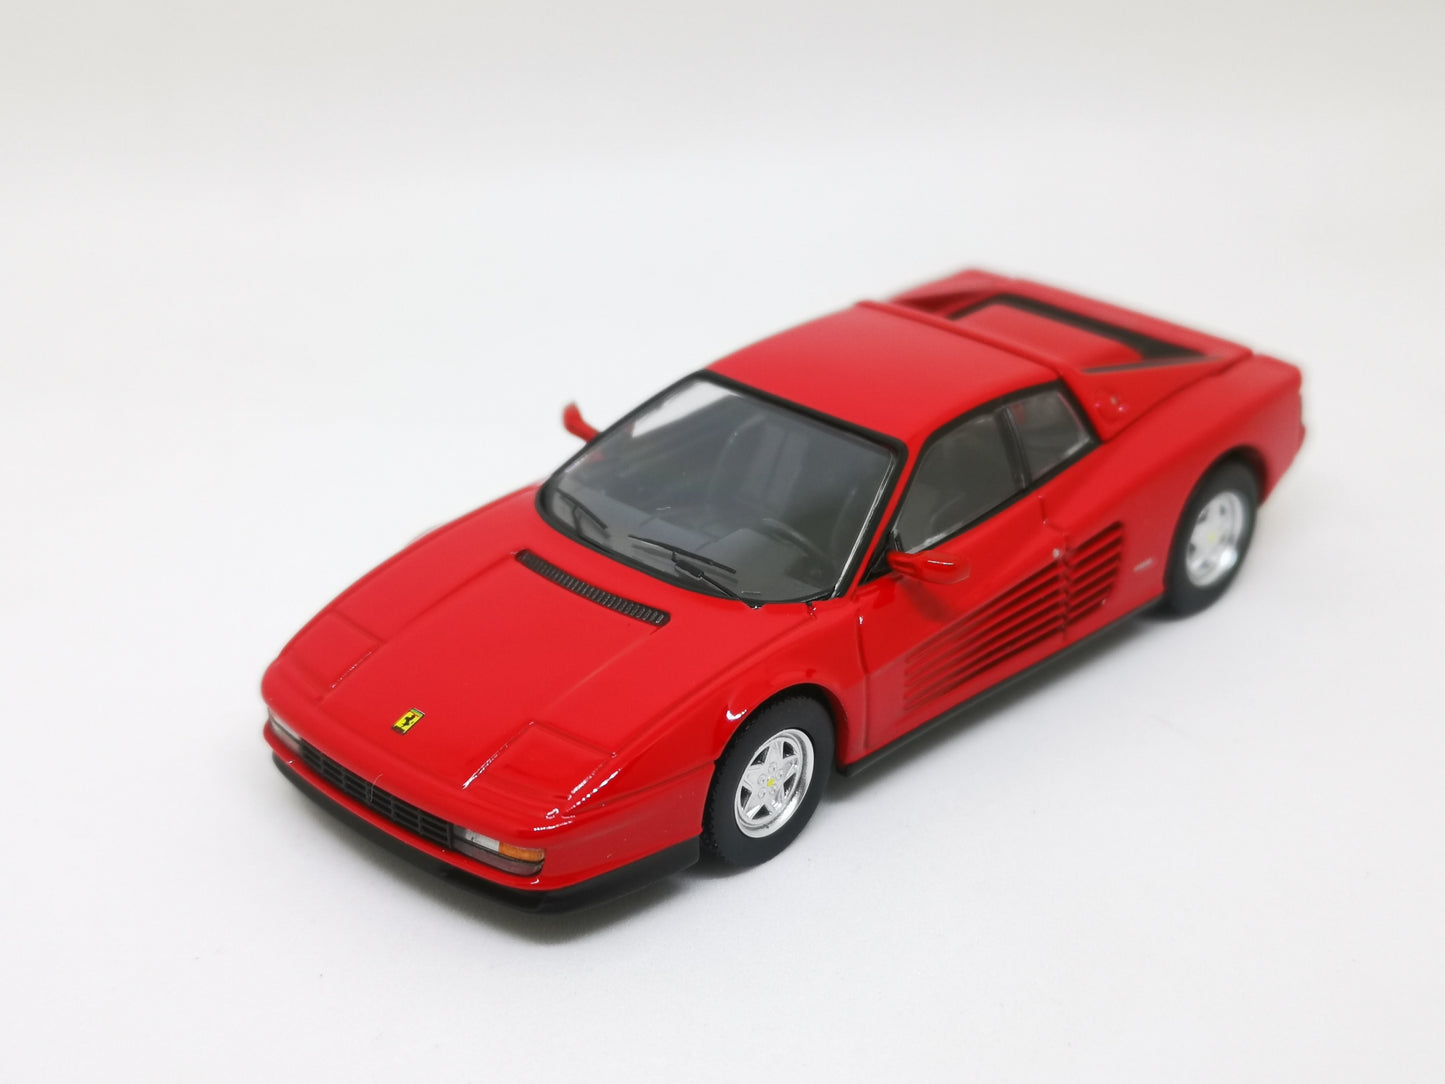 Tomica Limited Vintage Neo
Ferrari Testarossa